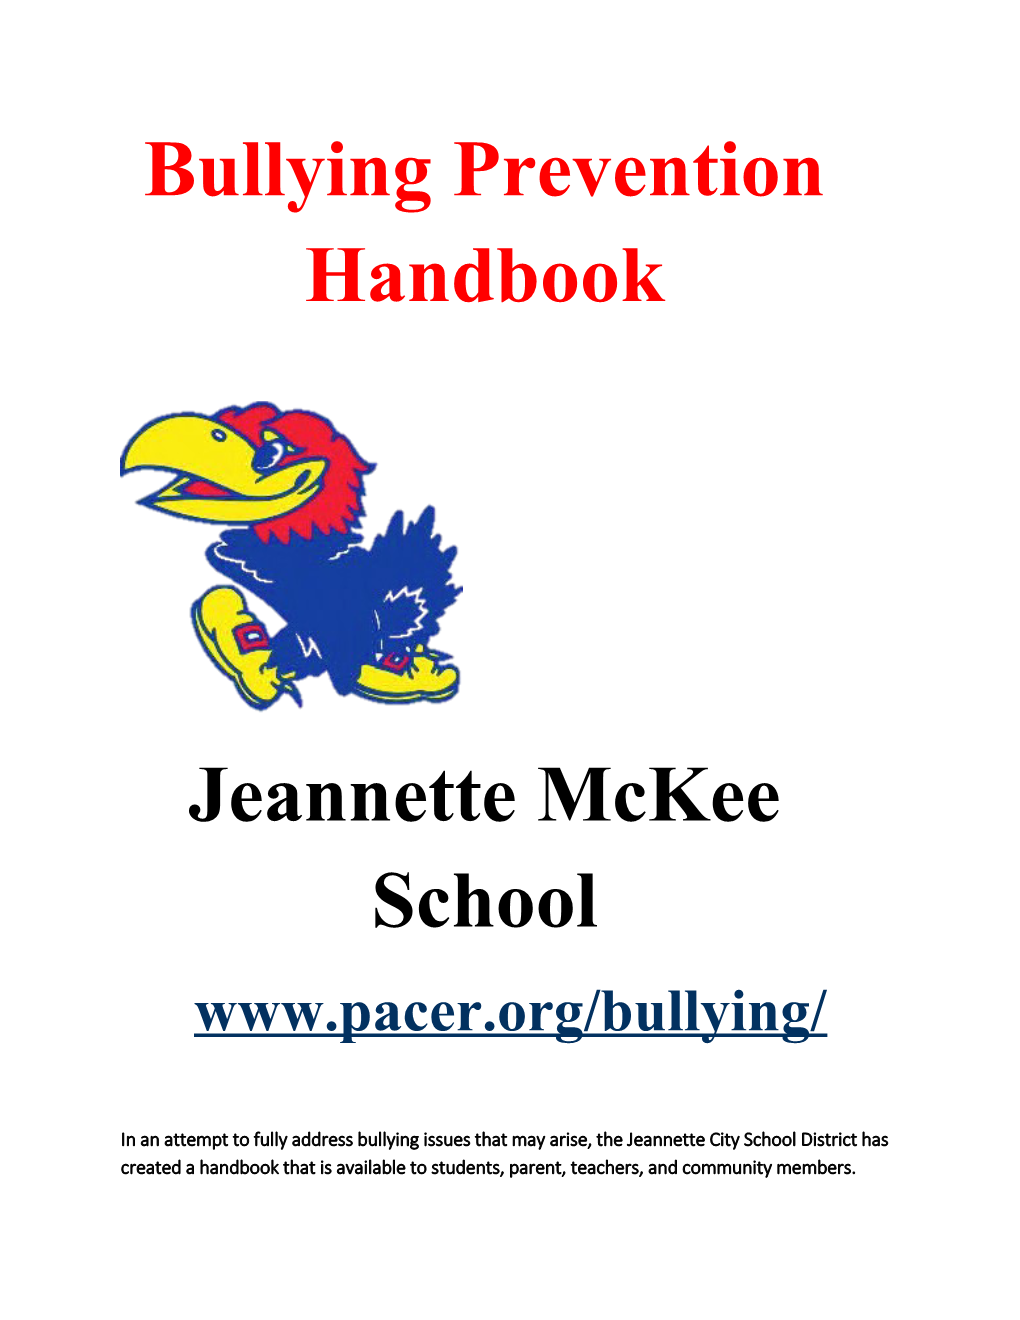 Bullying Prevention Handbook